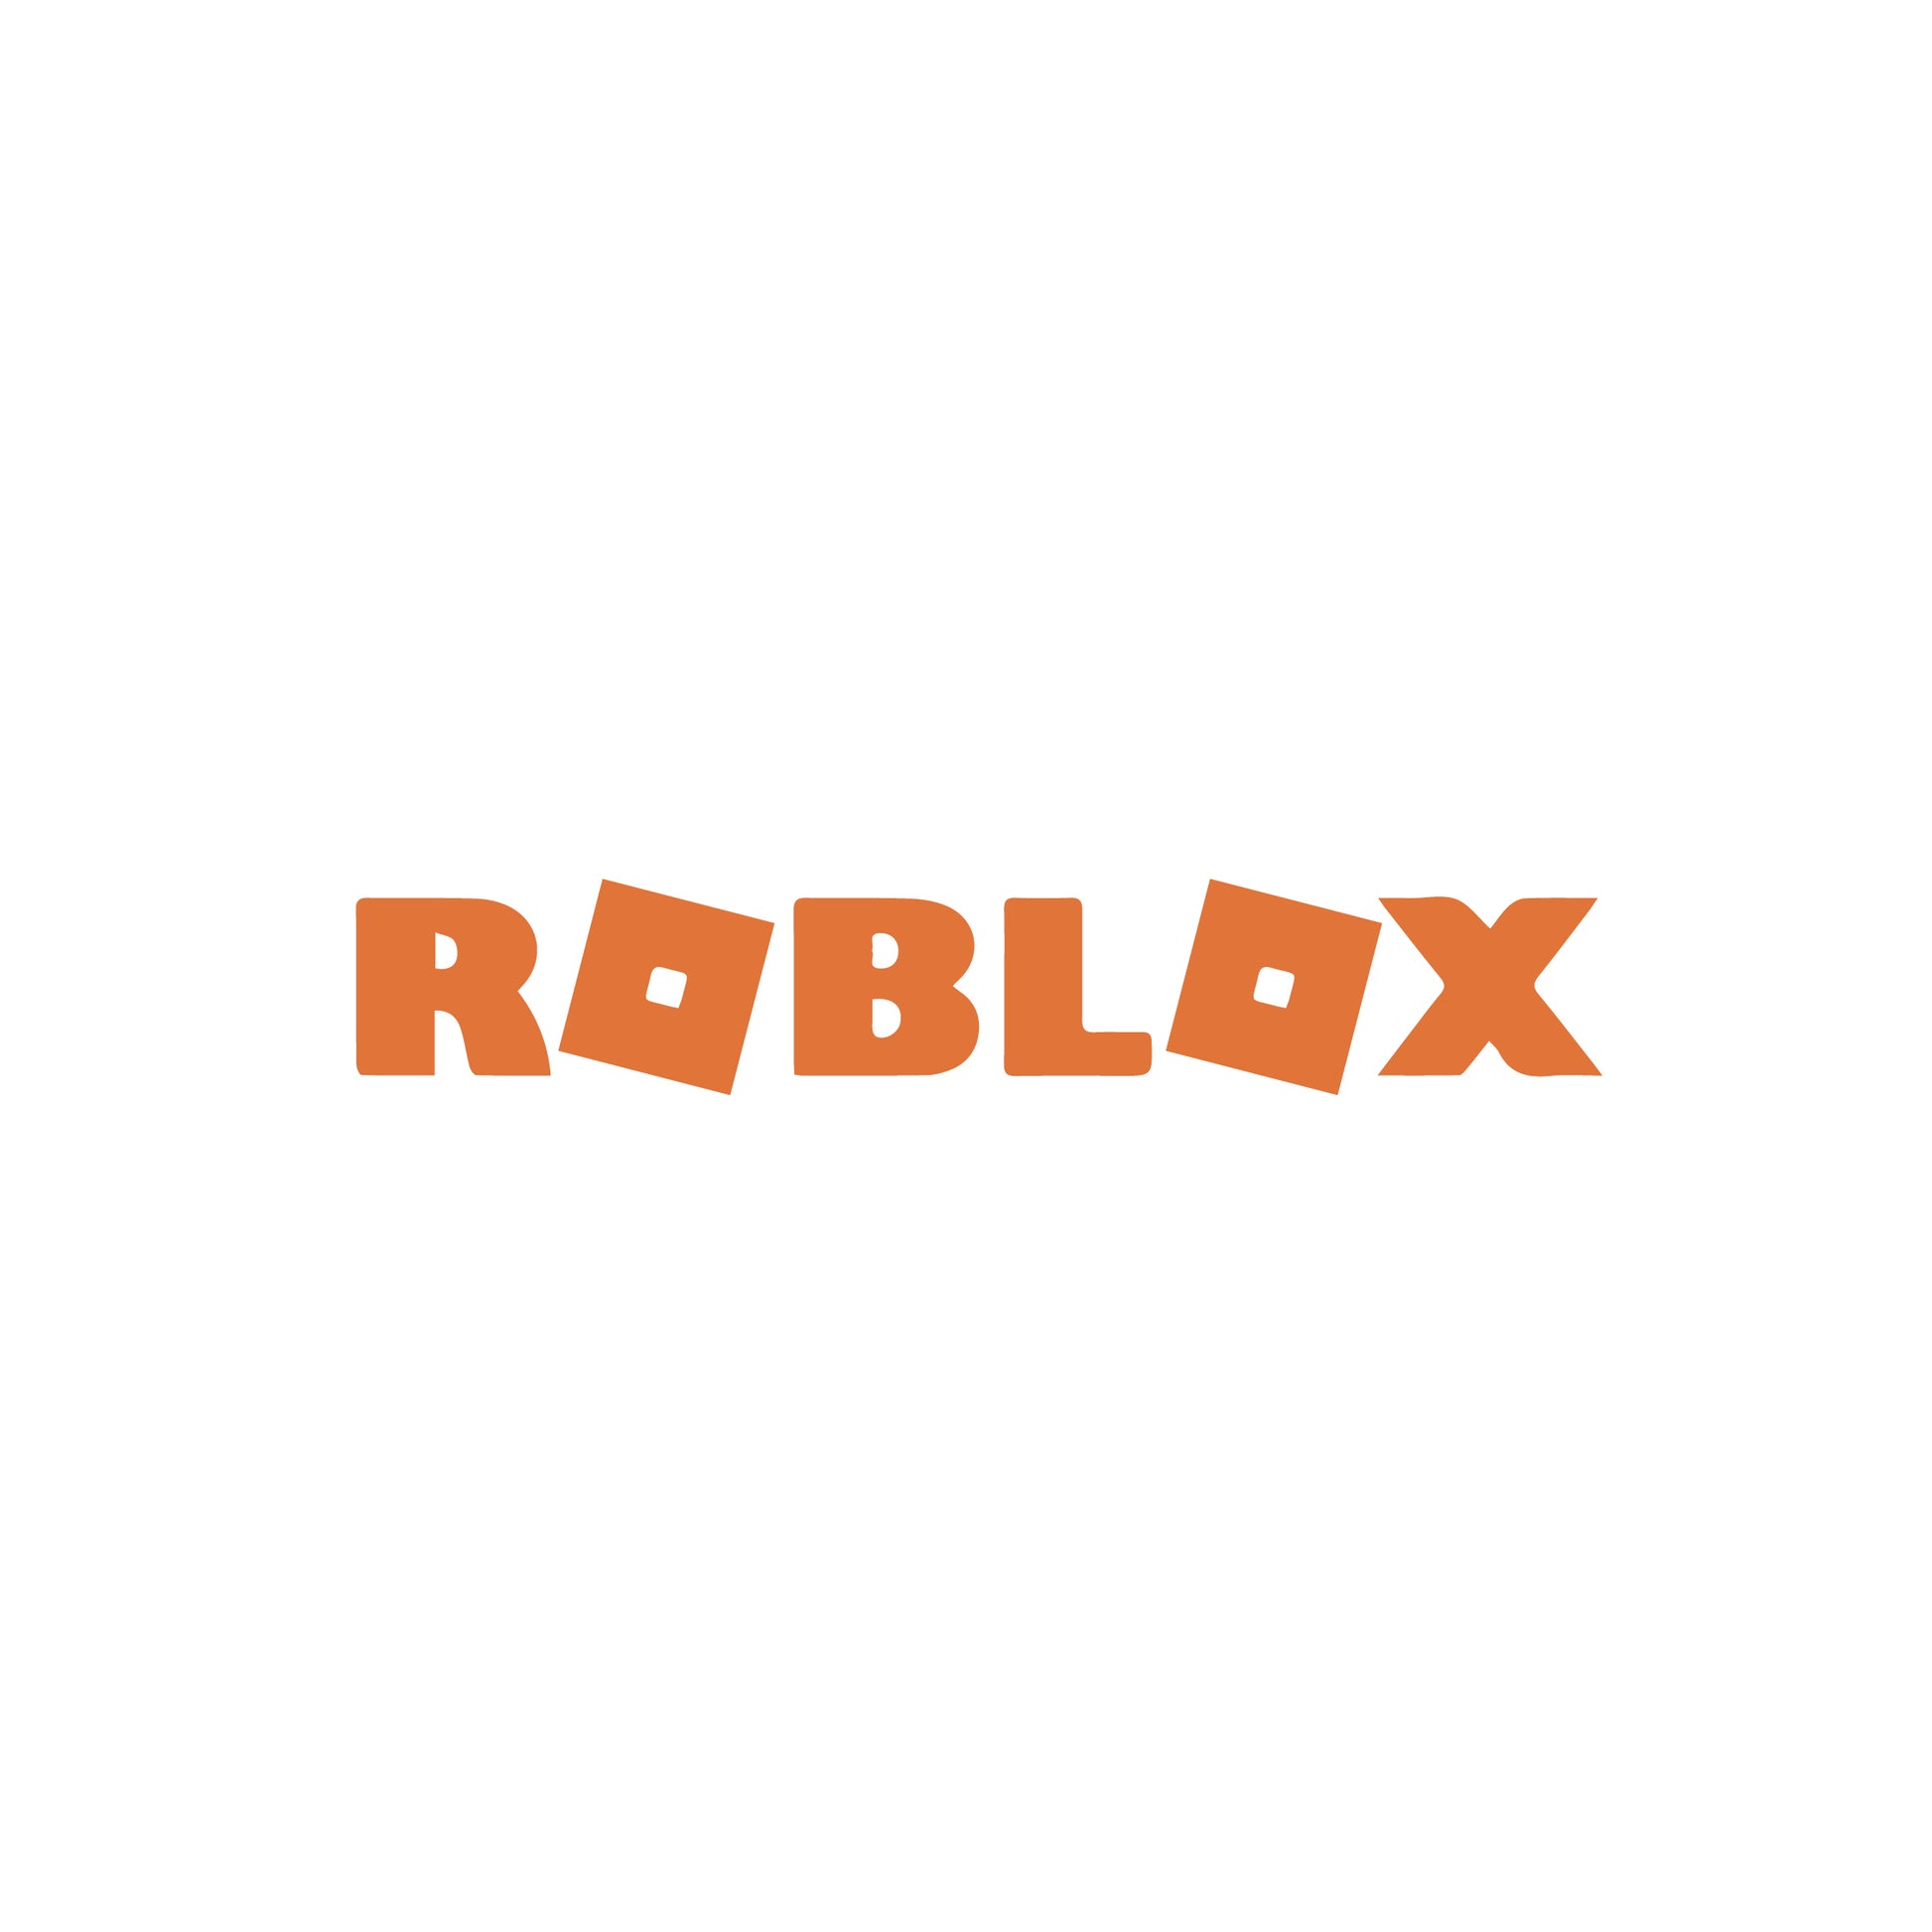 Roblox logo gamer bedroom wall decal sticker design